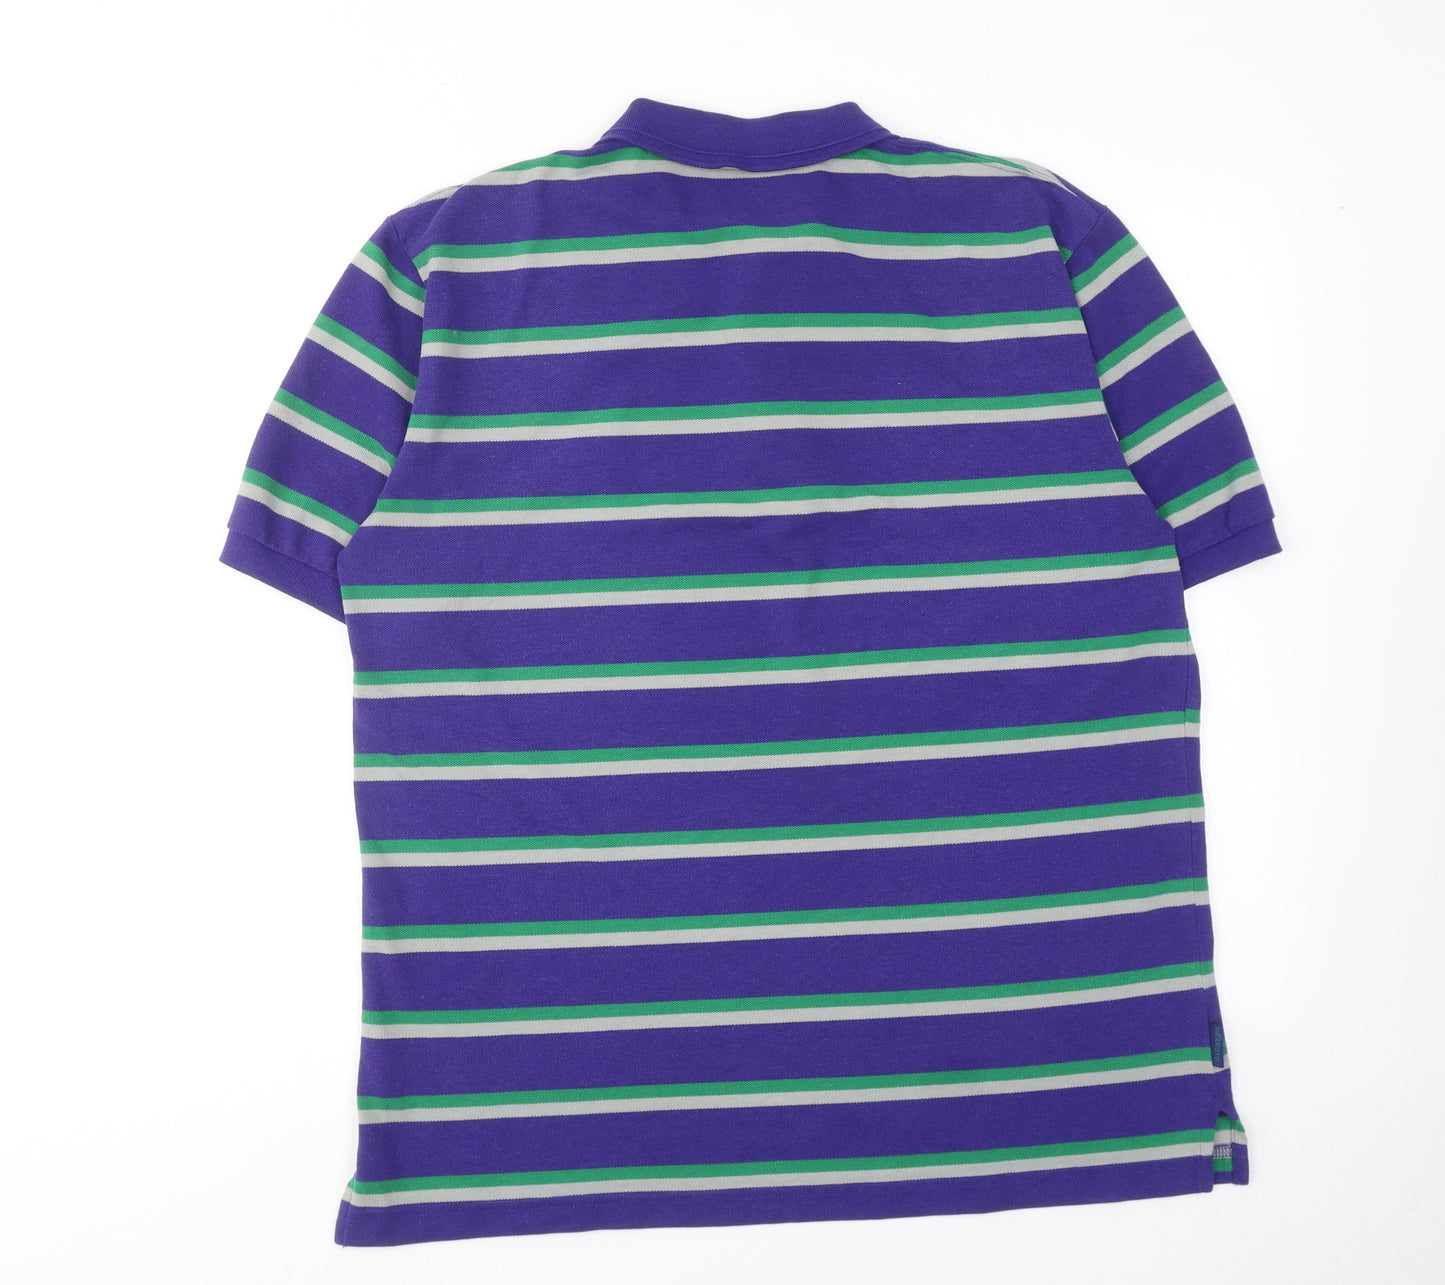 Slazenger Mens Purple Striped Polyester Polo Size L Collared Button